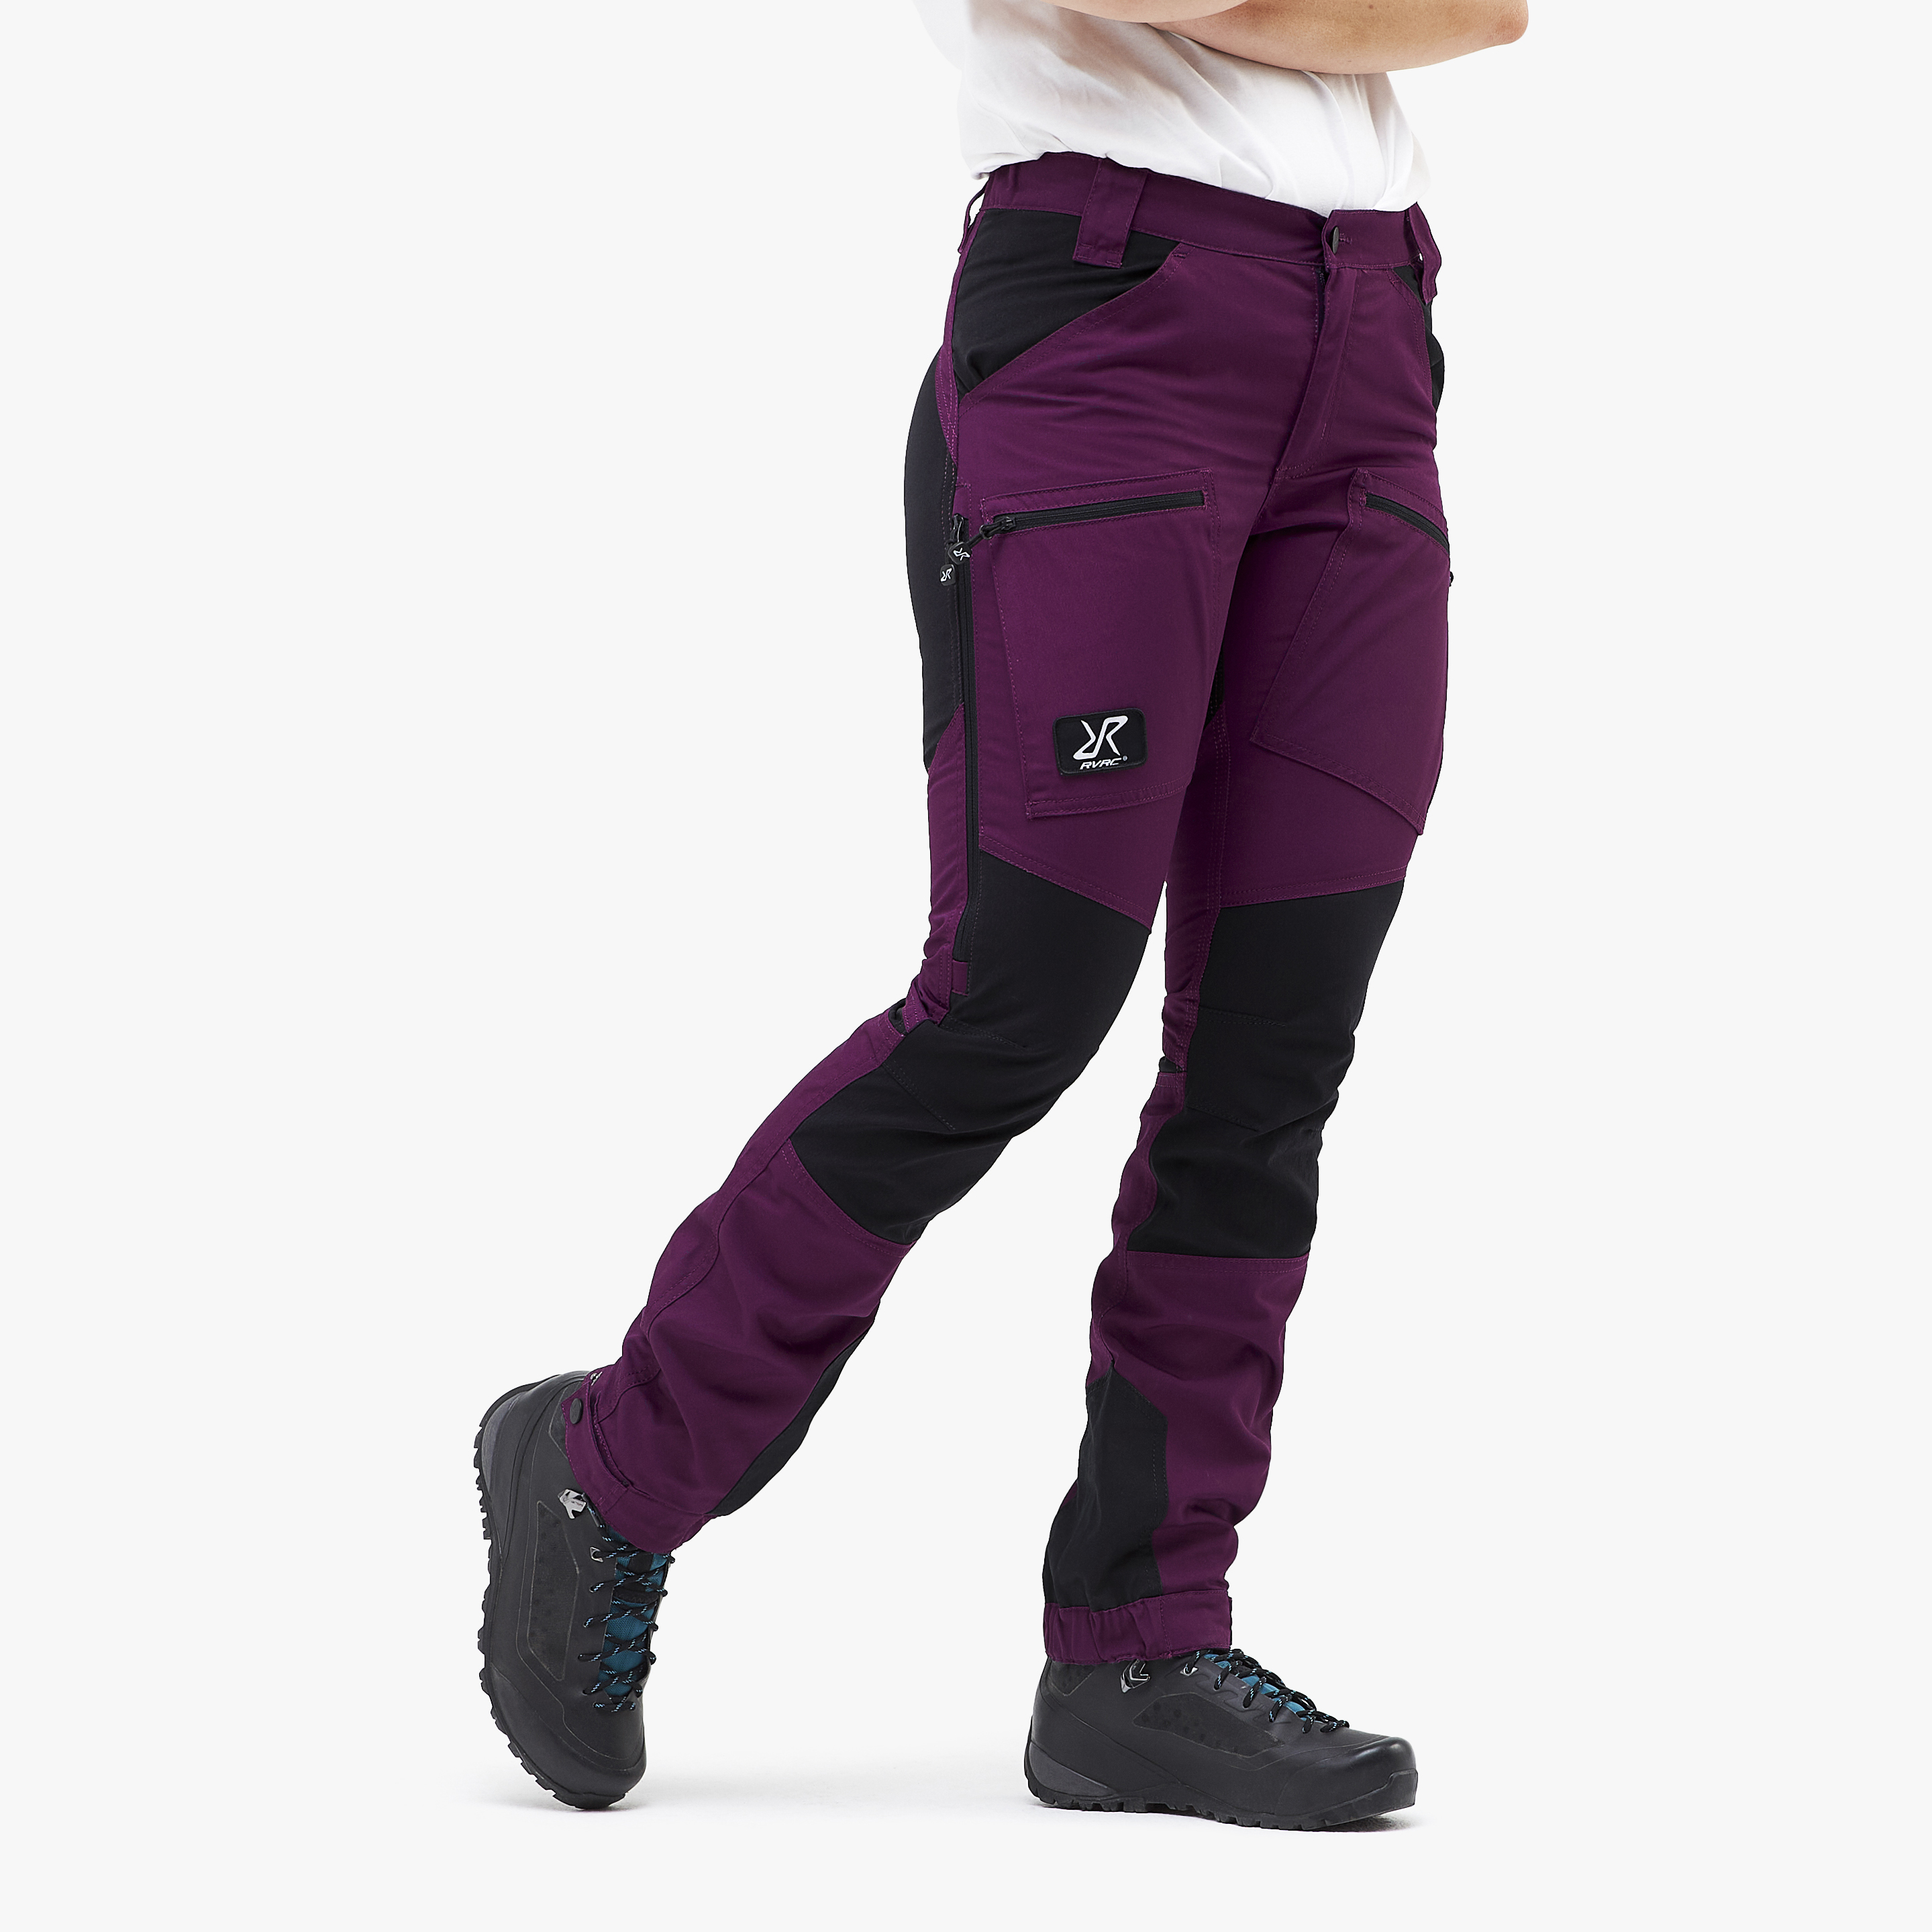 Nordwand Pro Short Pants Purple Rain Femme